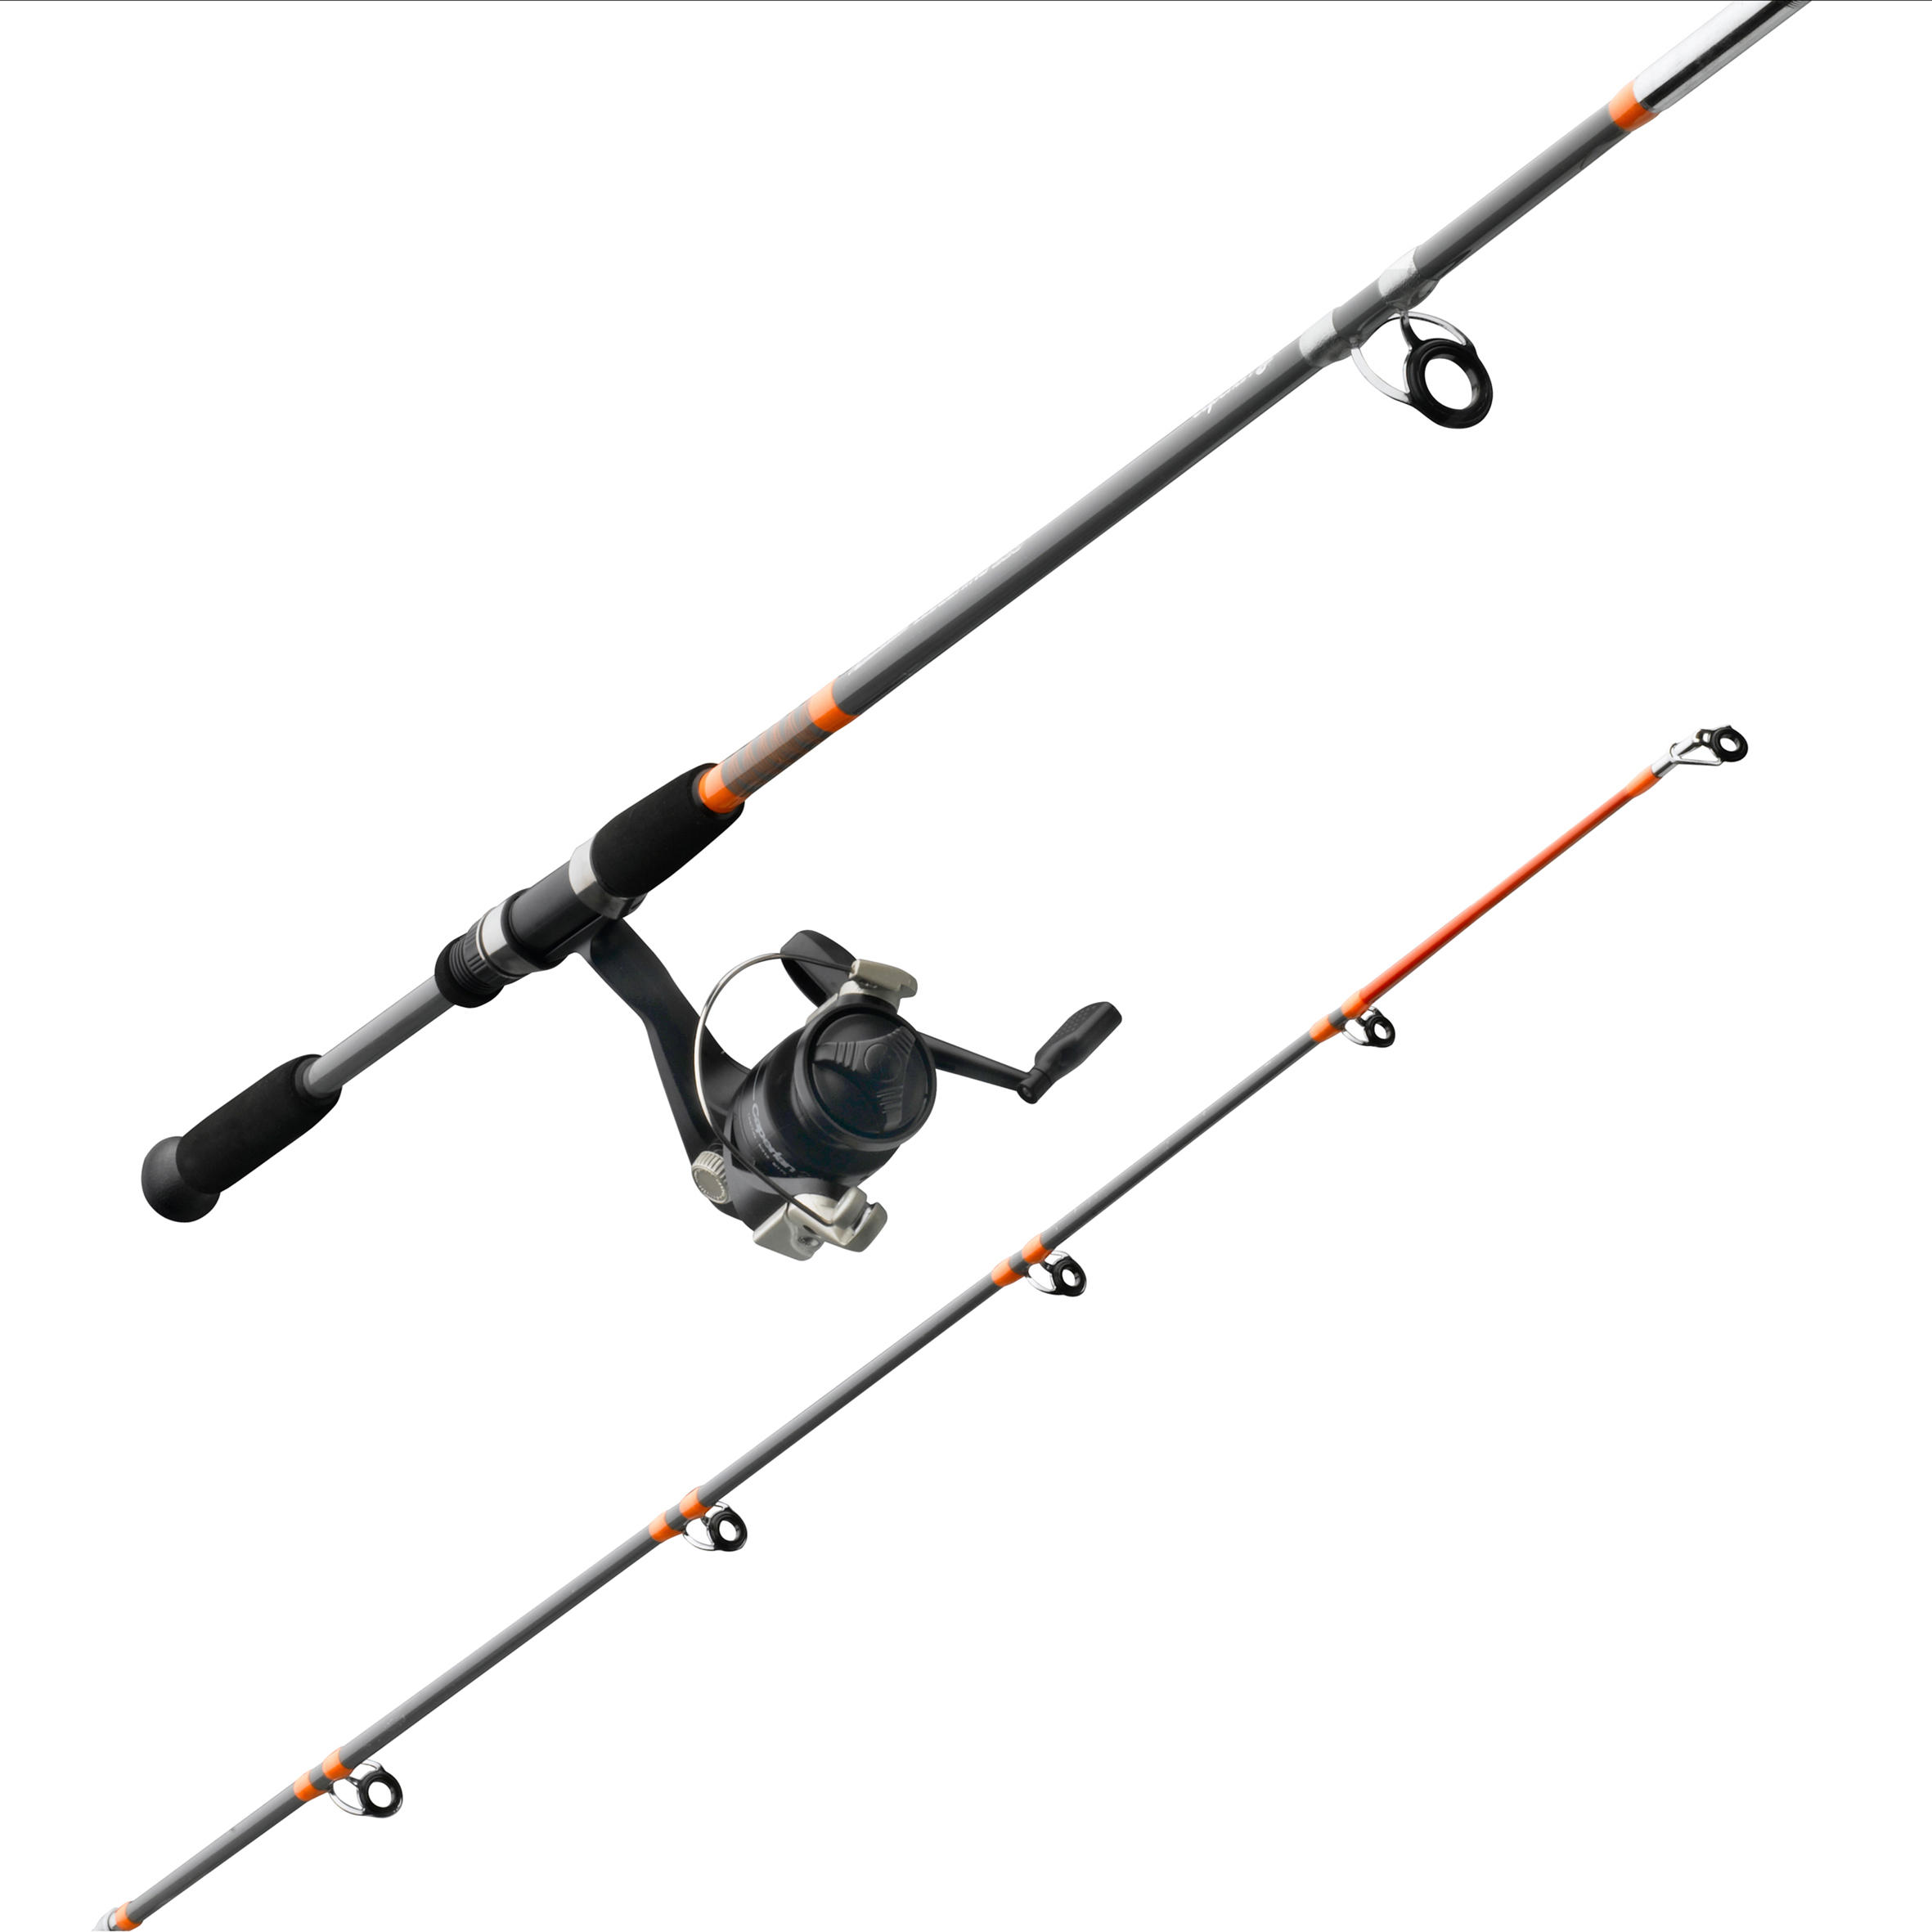 Buy Ledgering Fishing Rods Online in 